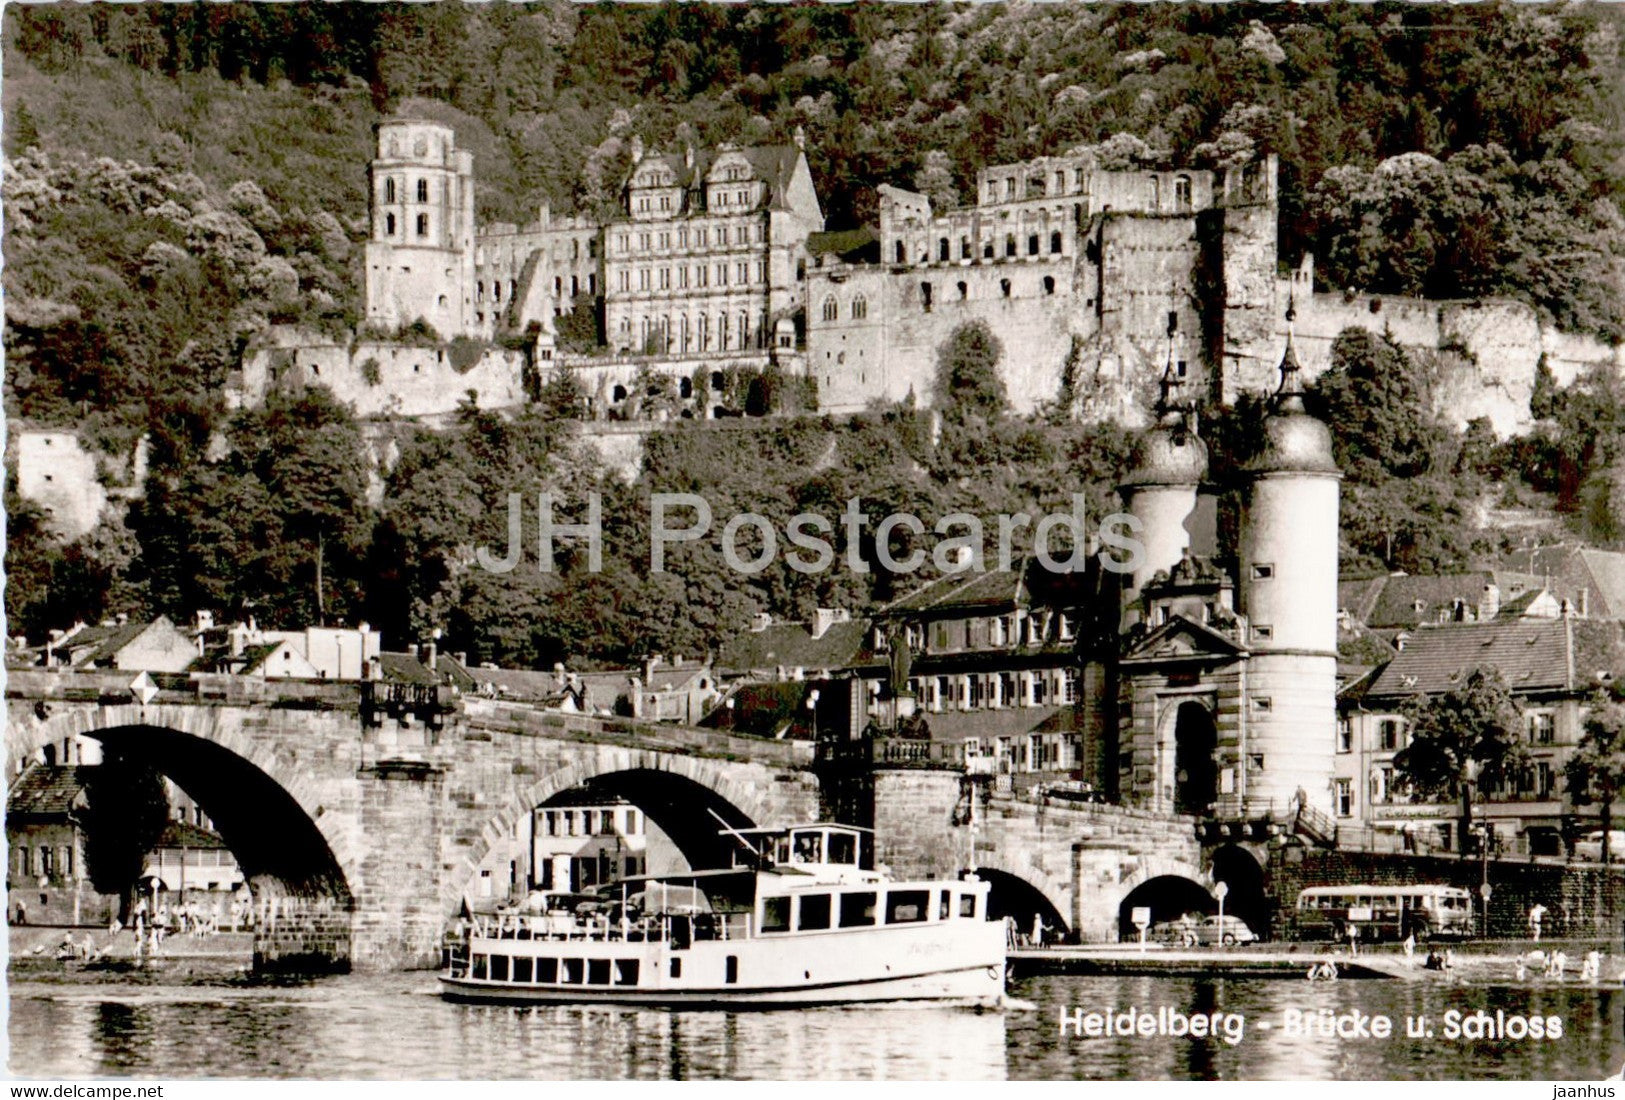 Heidelberg - Brucke u Schloss - castle - bridge - ship - old postcard - Germany - unused - JH Postcards